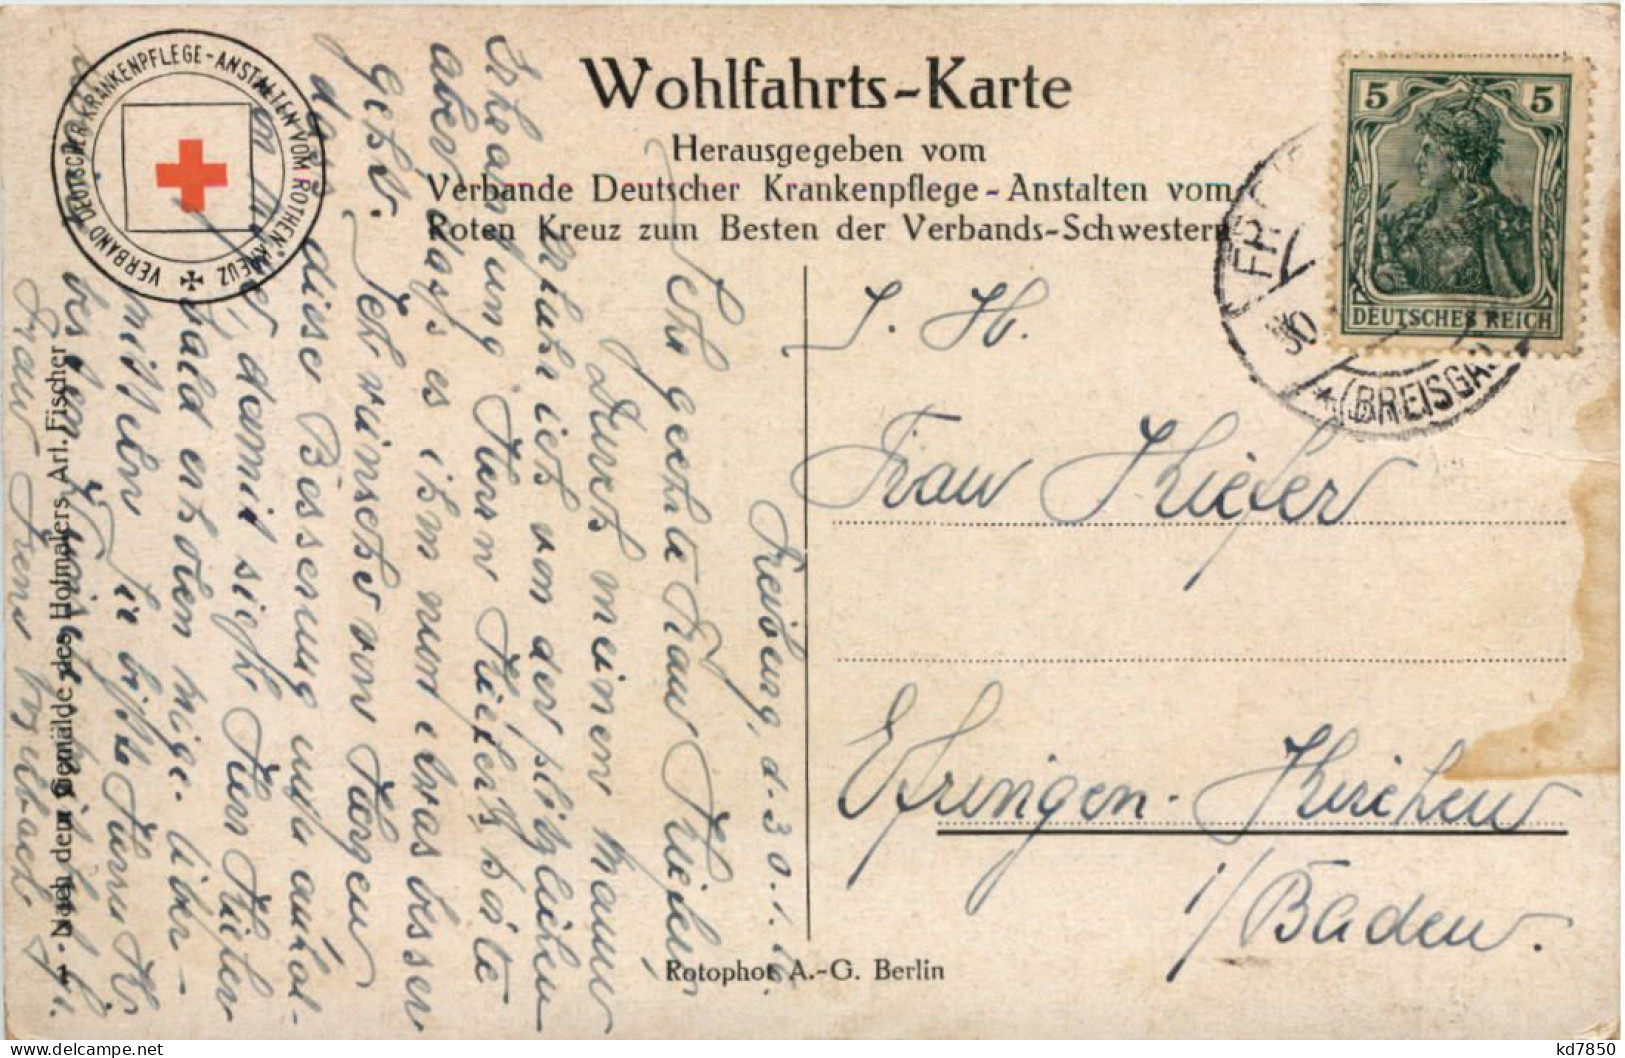 Kaiser Wilhelm II - War 1914-18